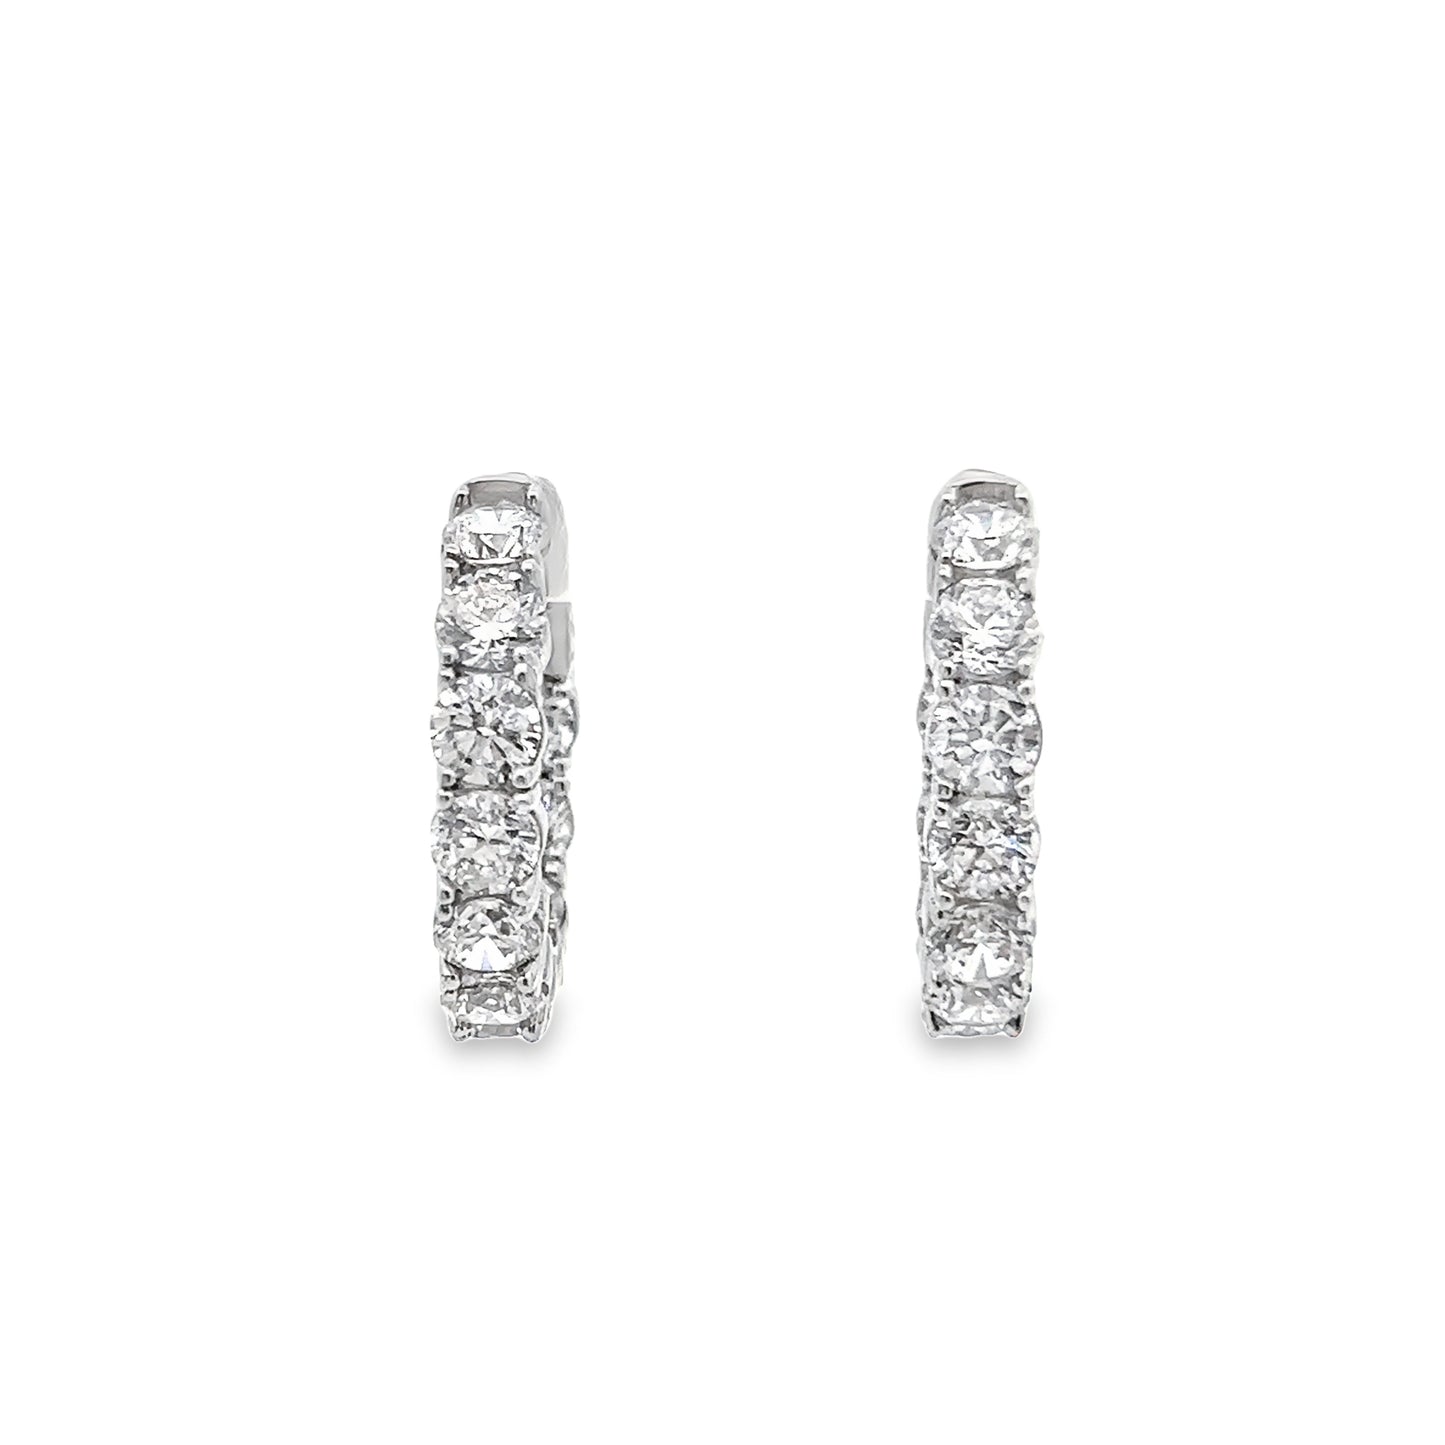 Inside-Out Diamond Hoop Earrings in 14K White Gold